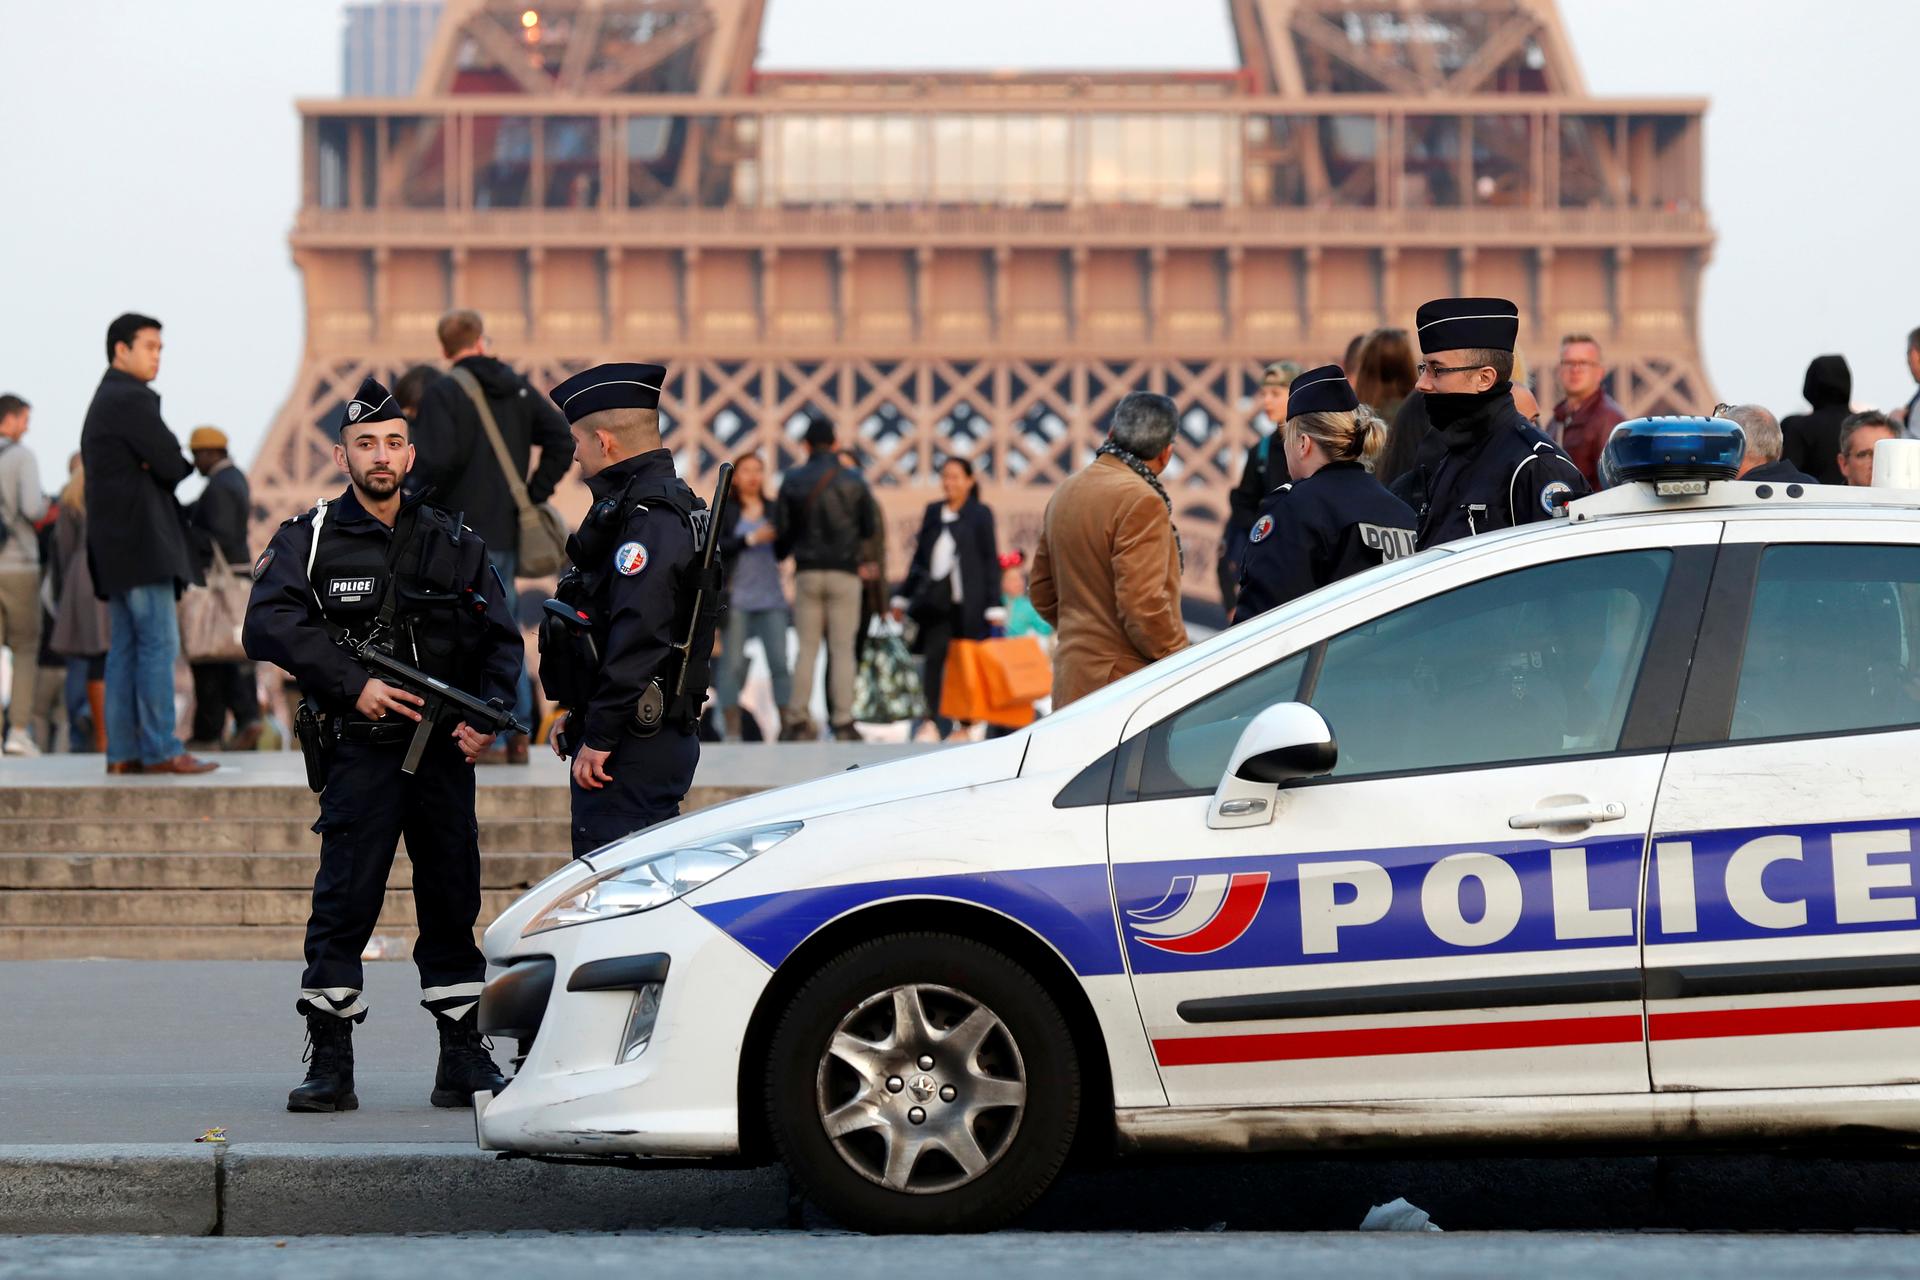 Police patrol at the Trocadero near the Eiffel Tower